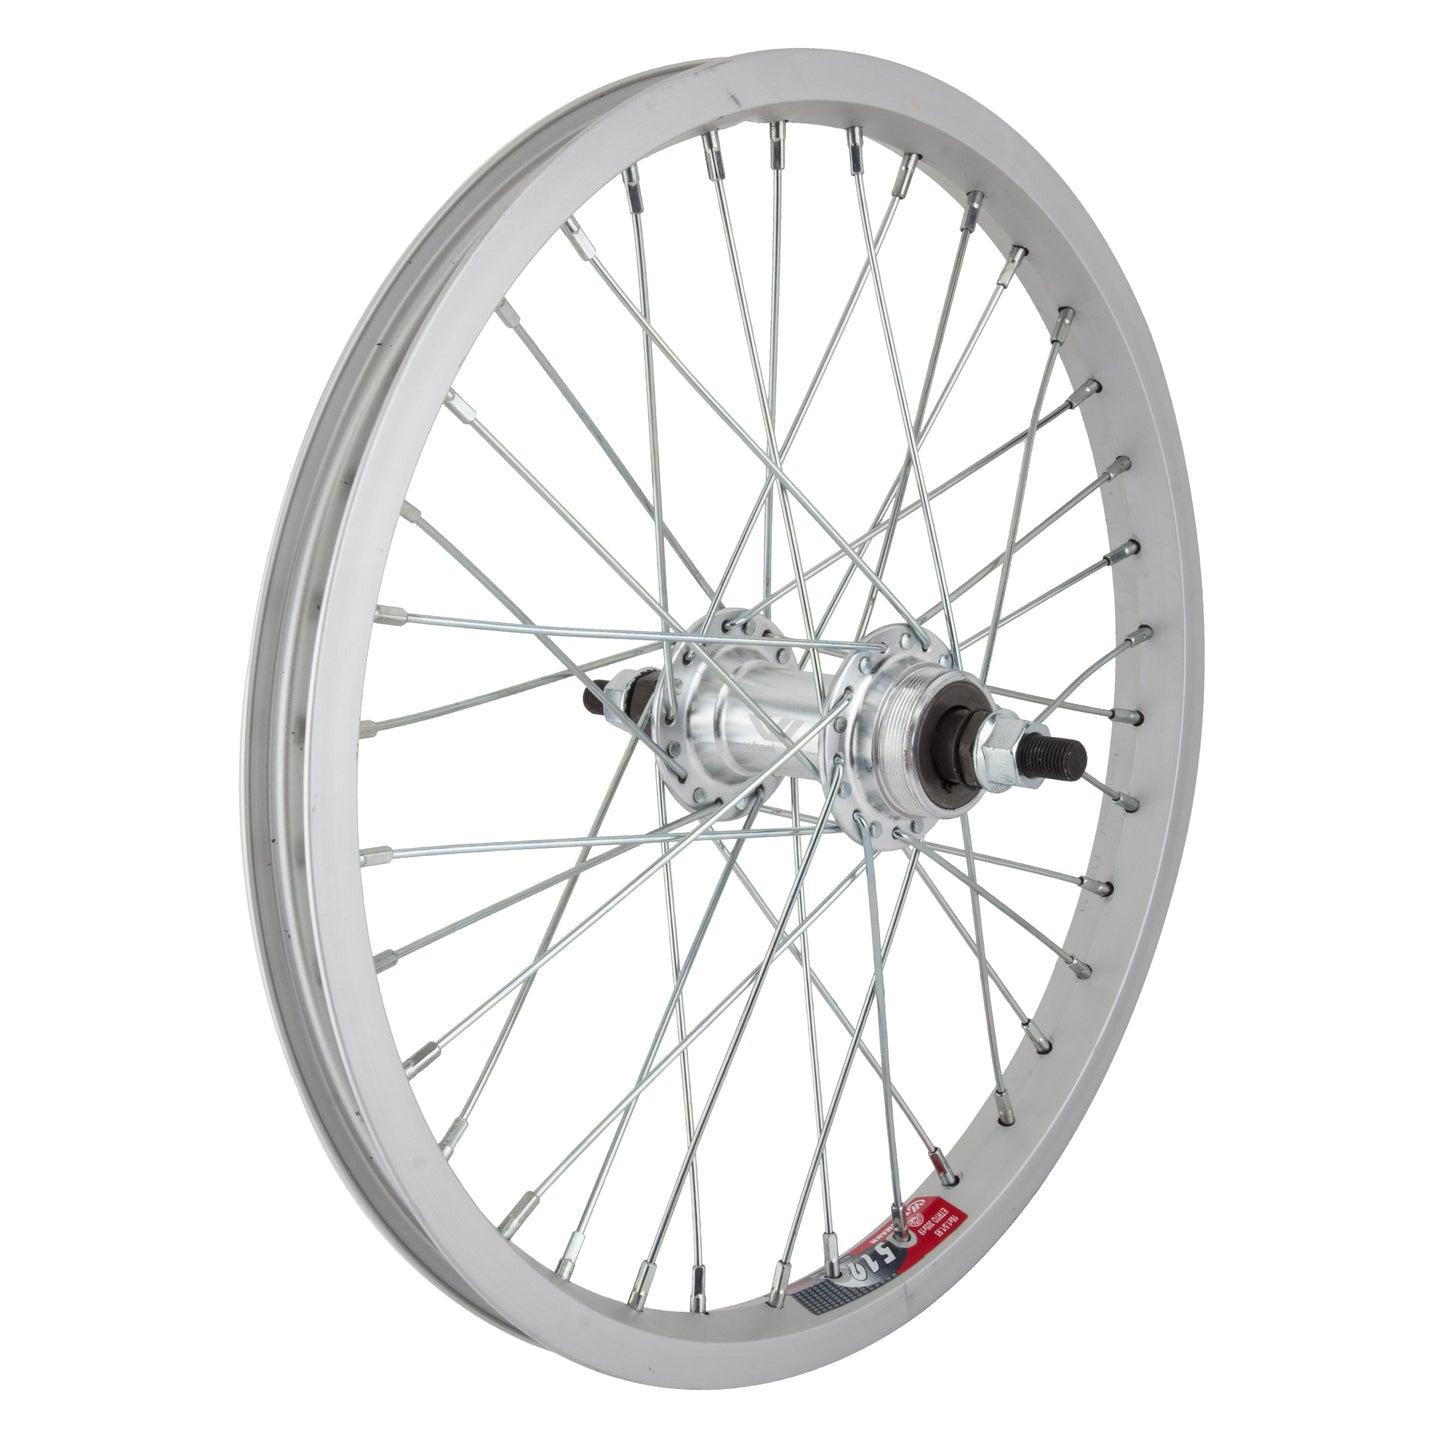 Wheelmaster 16x1.75 305x19 Juvenile Bicycle Wheel - Rear, Freewheel, 3/8, 110mm